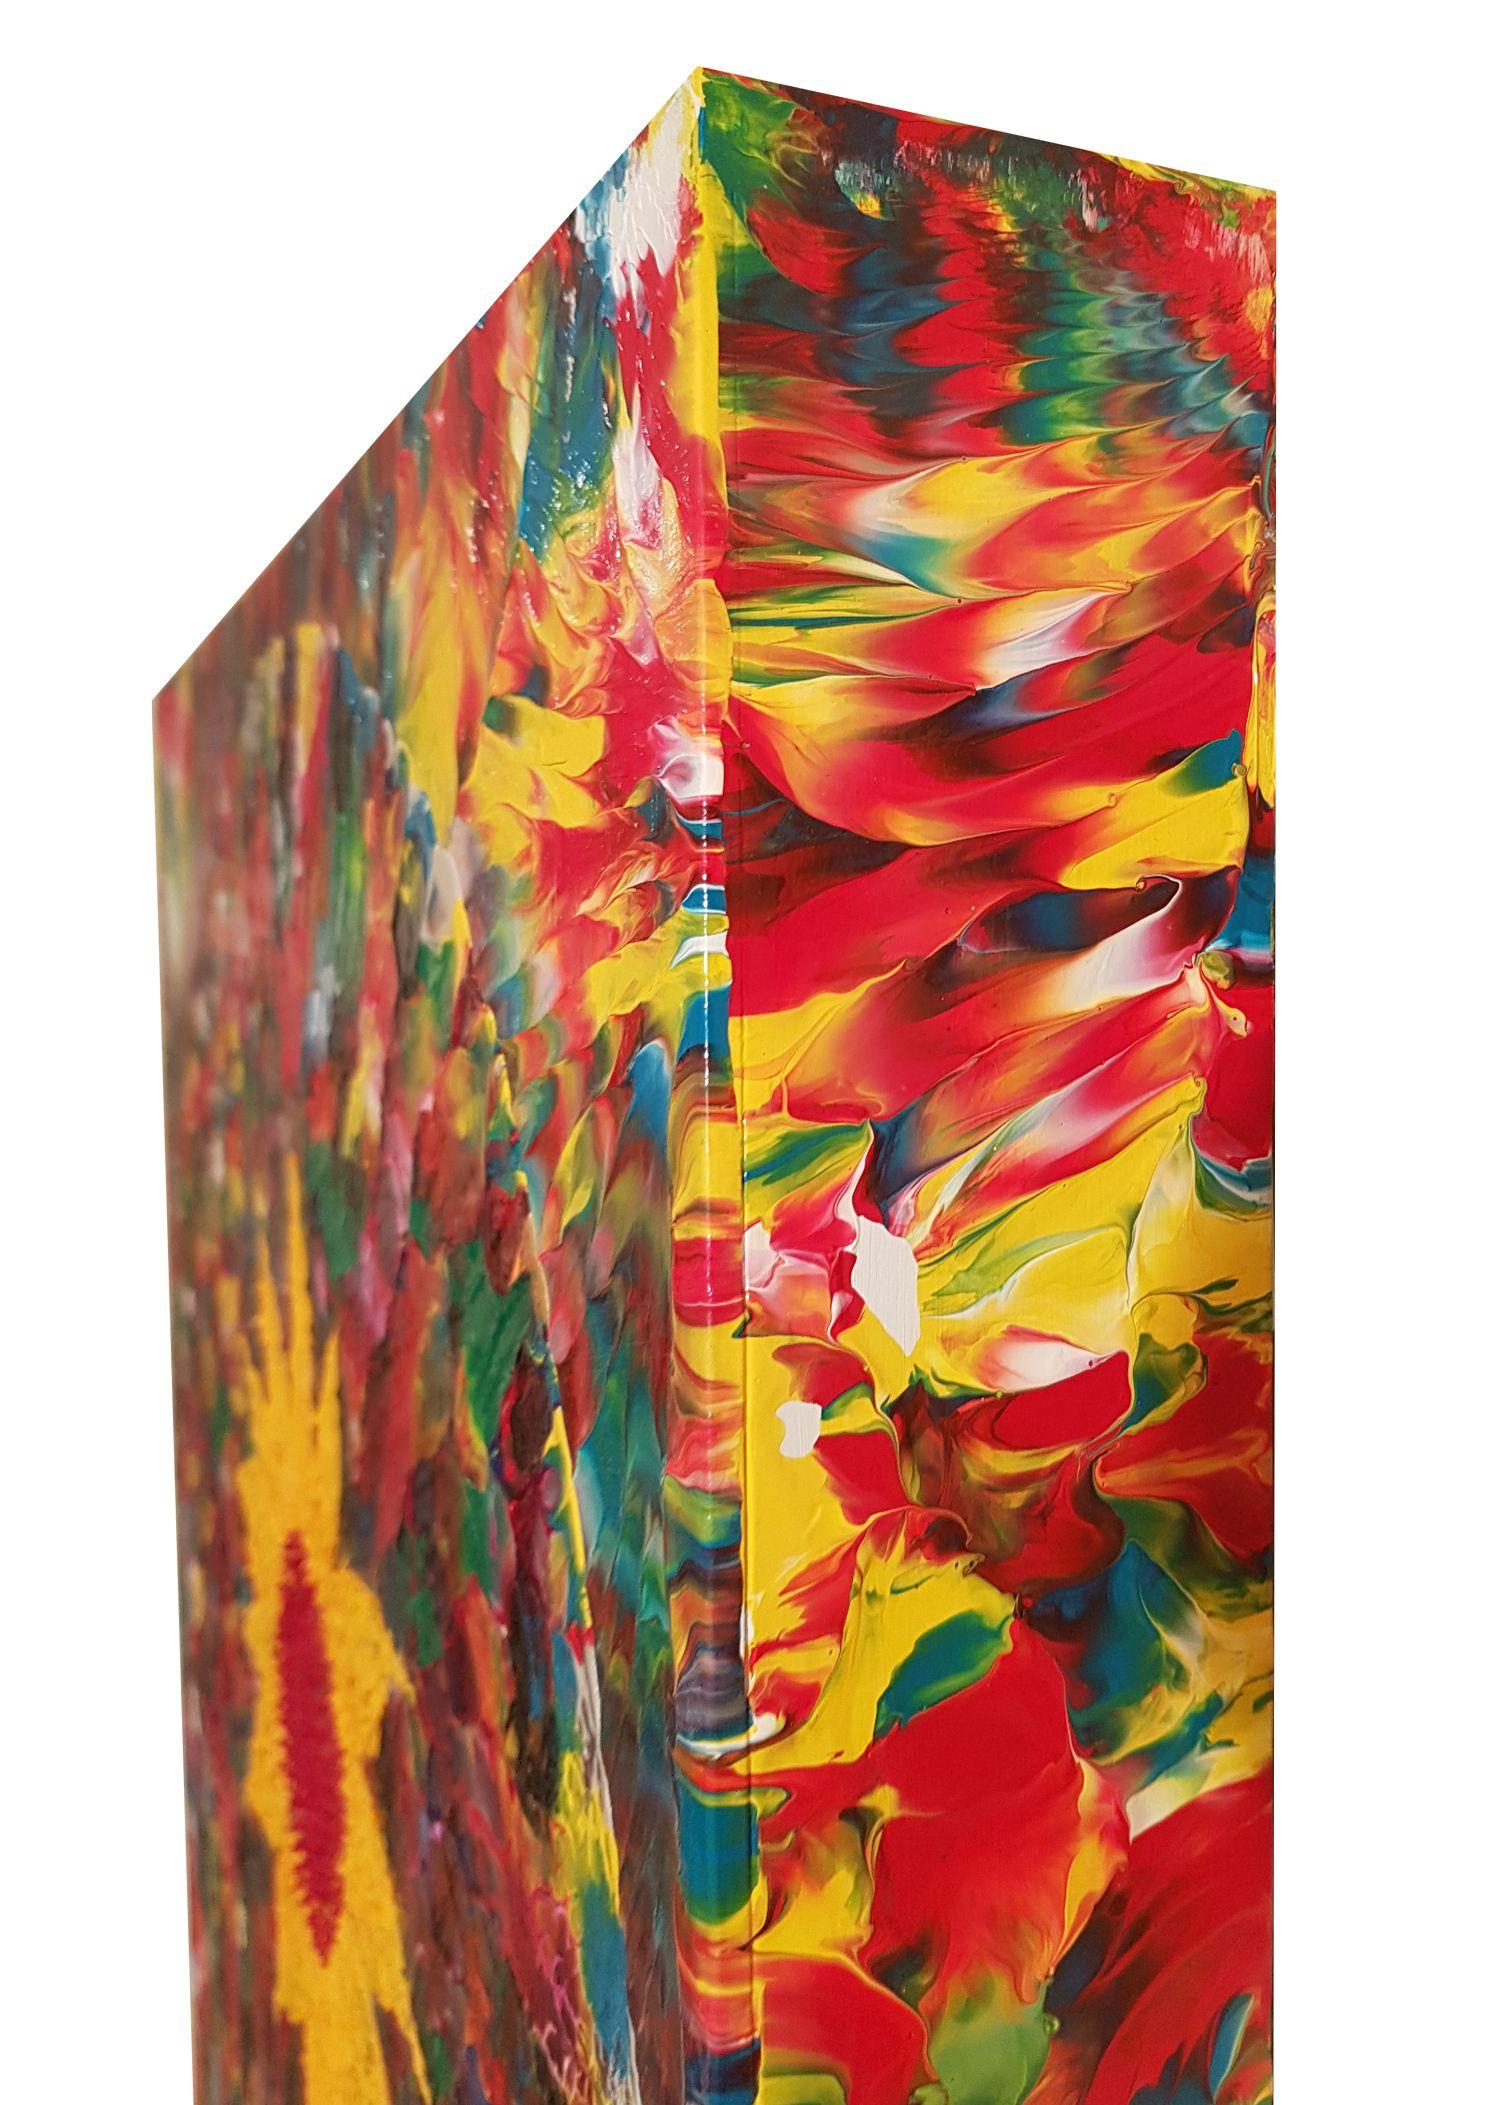 Psychedelic Sunflower, Mixed Media on Wood Panel - Abstract Mixed Media Art by Alexandra Romano